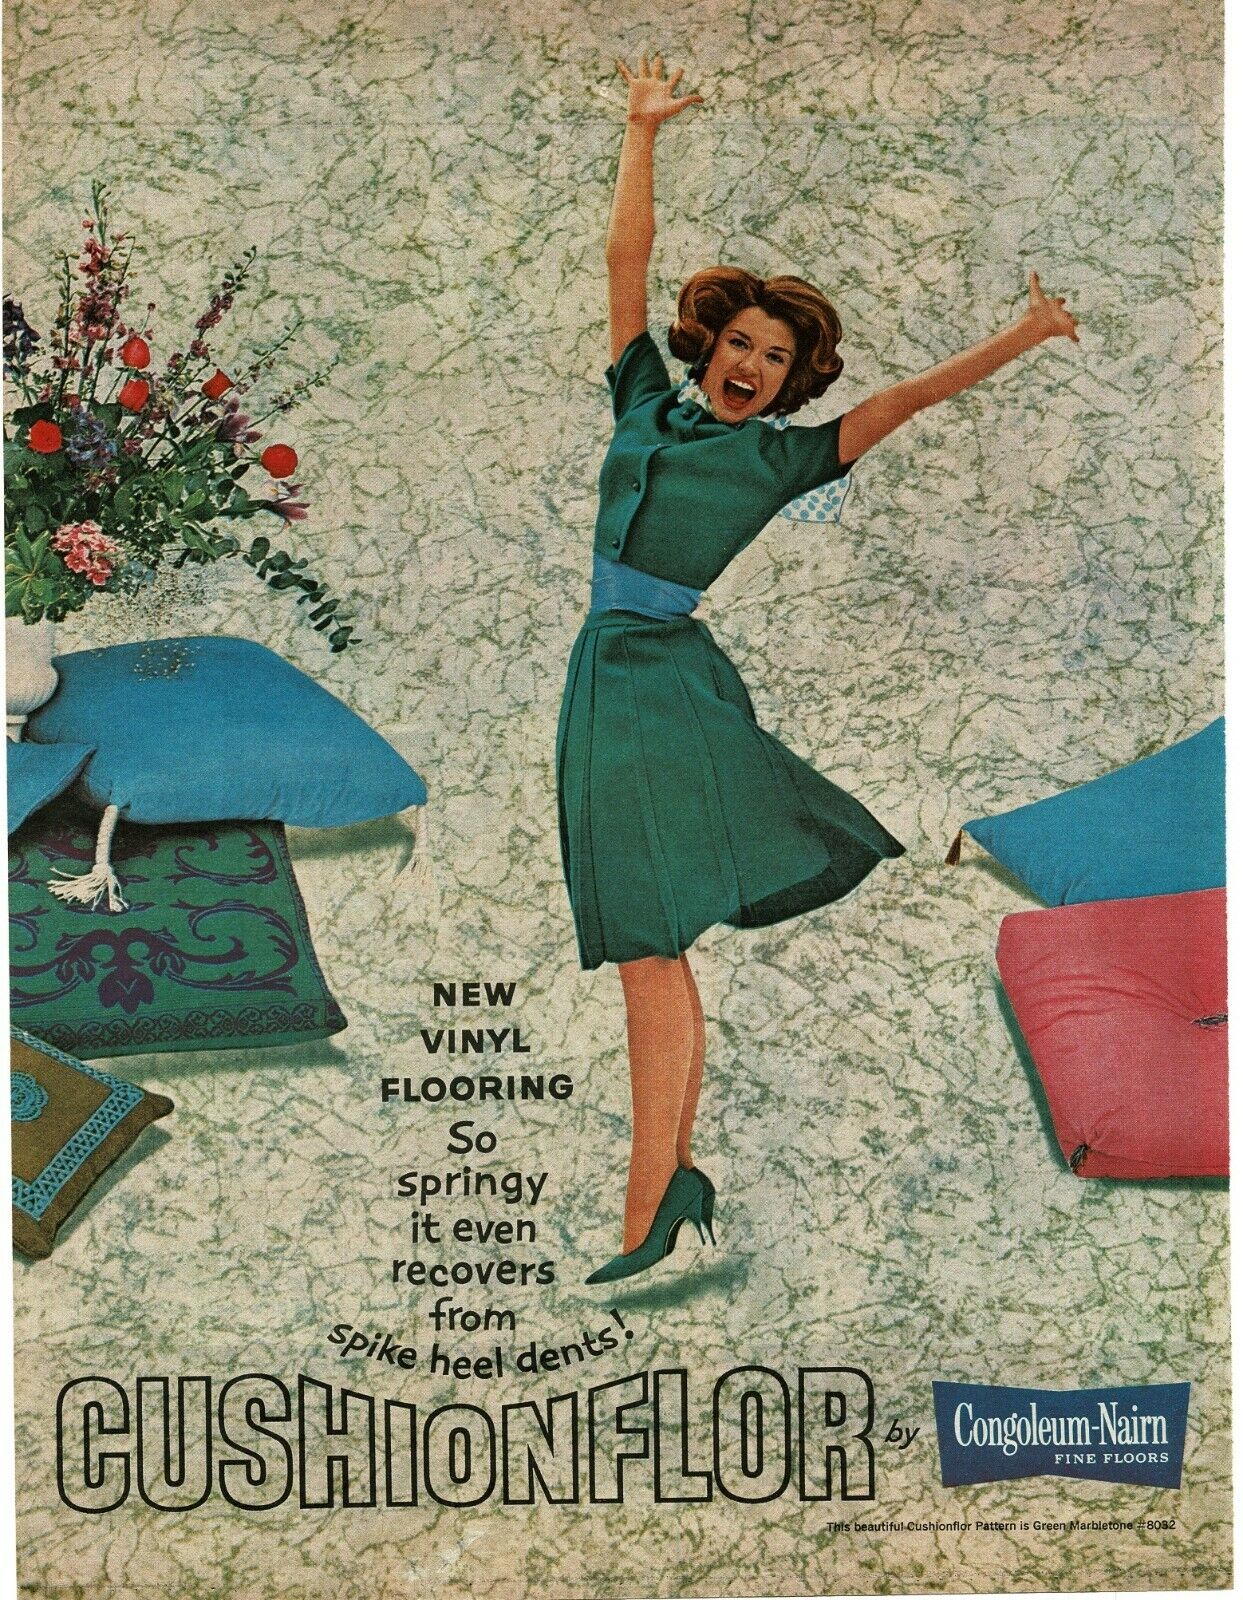 1963 CONGOLEUM Cushionflor Vinyl Flooring woman jumping for joy Vintage Print Ad